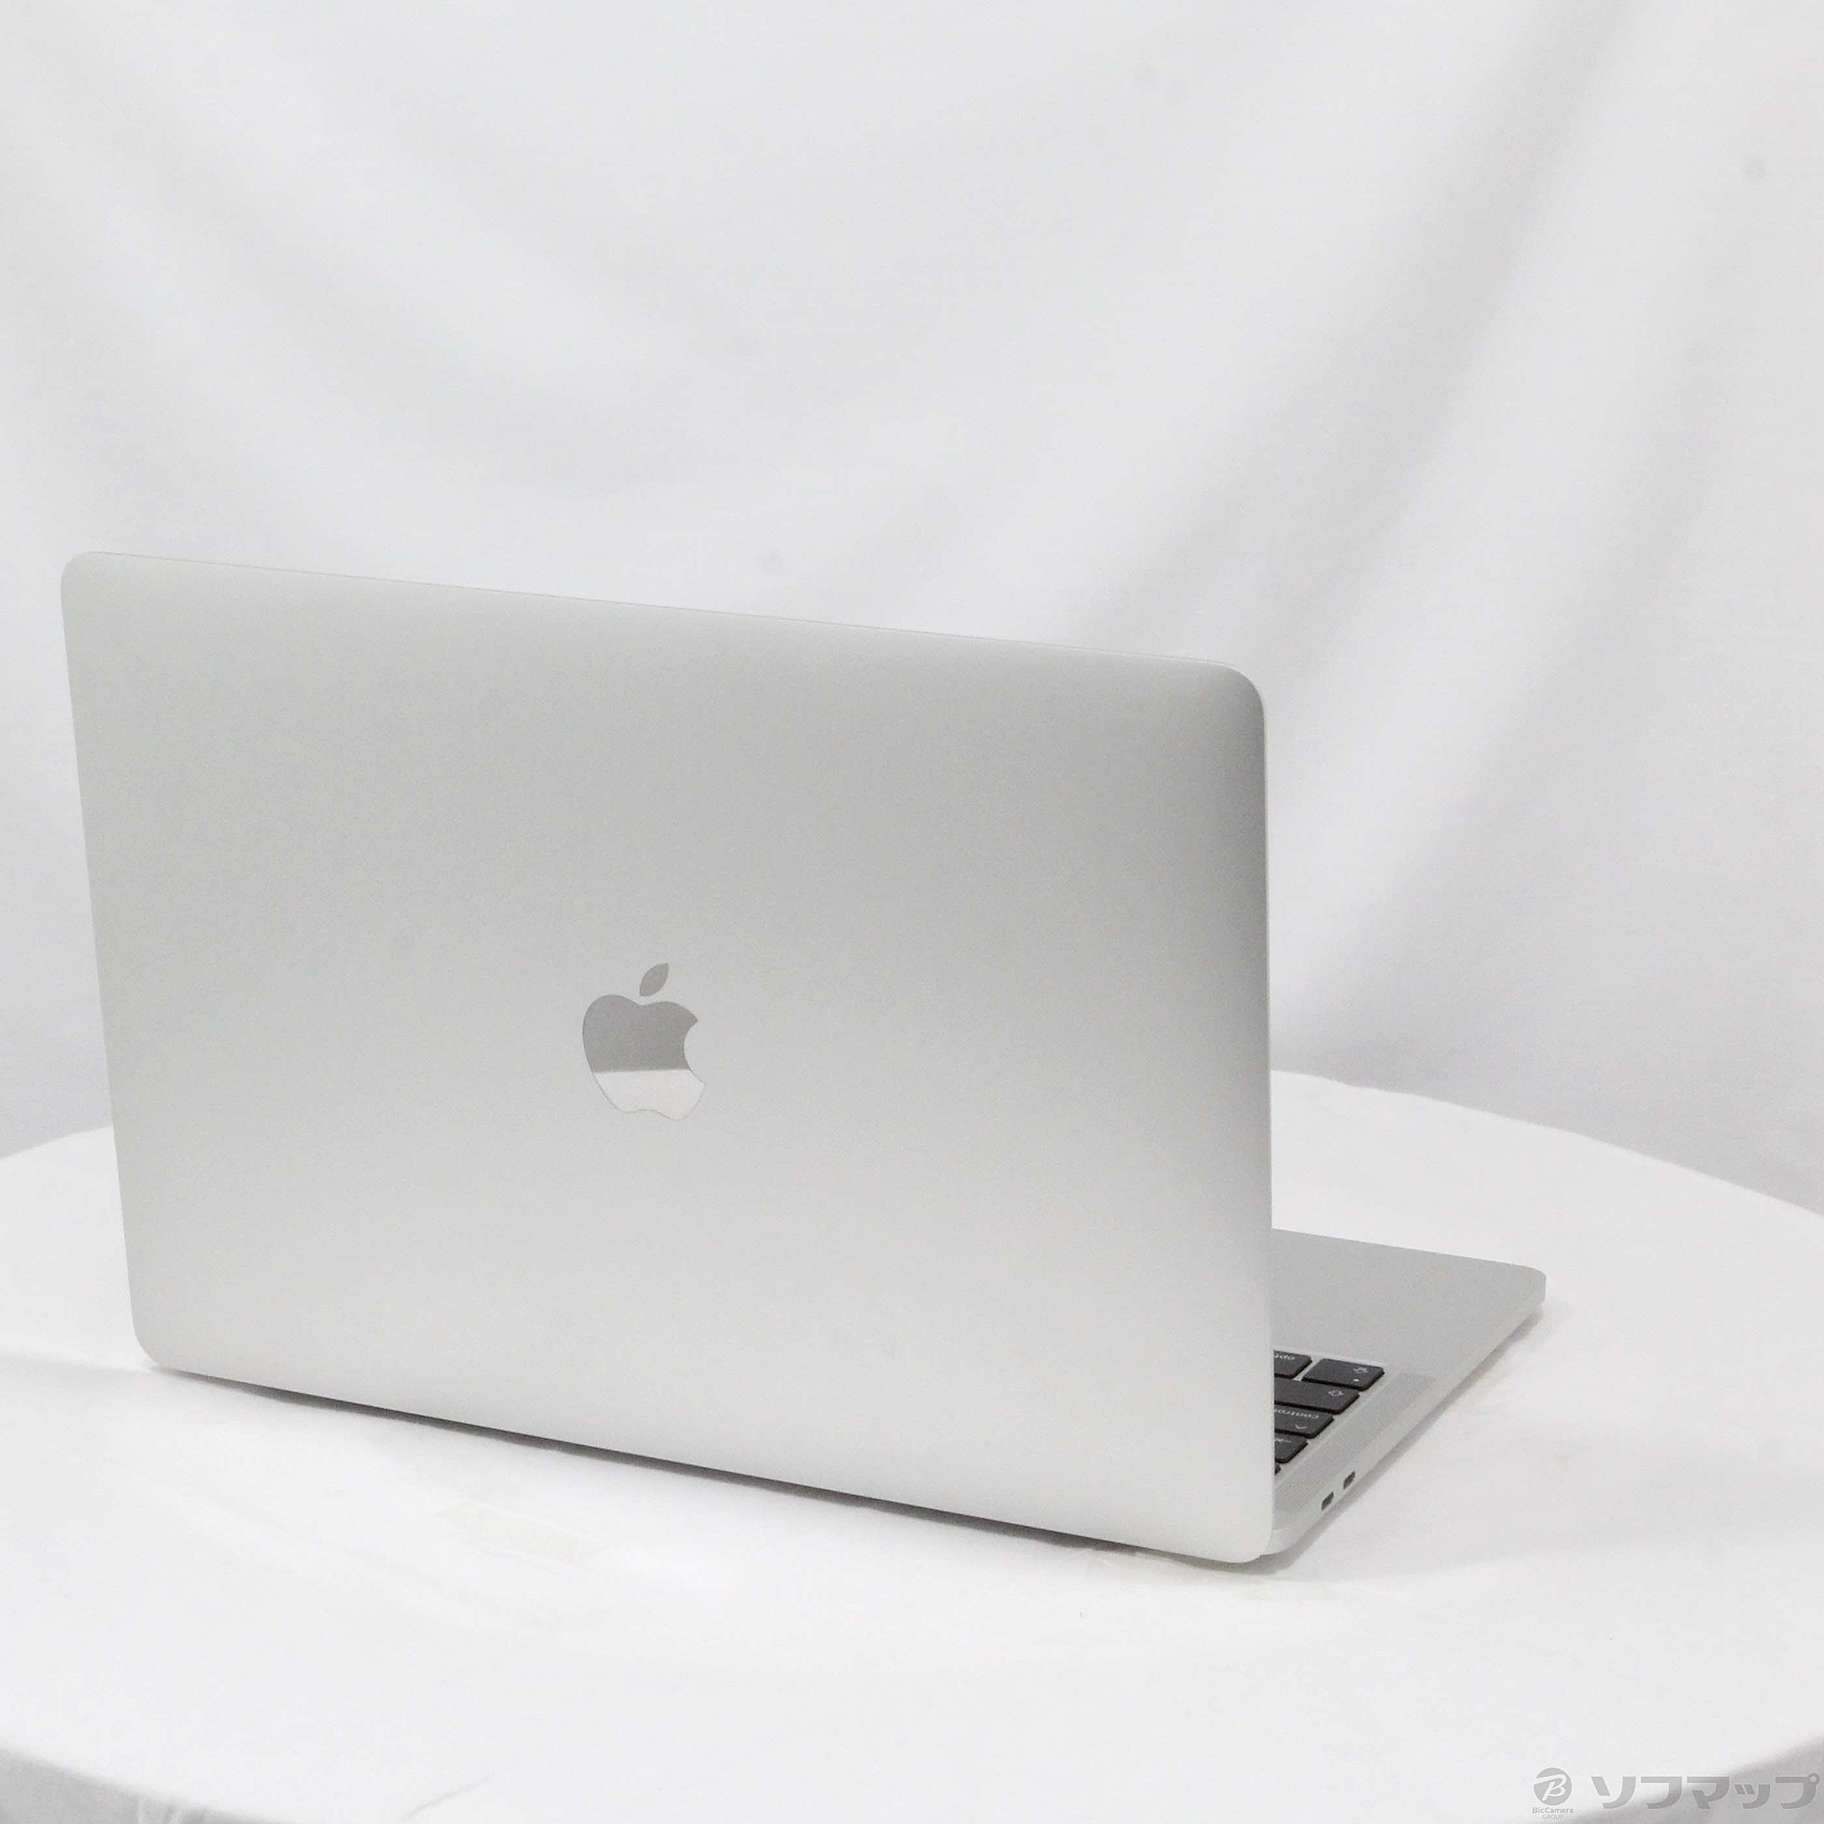 中古品〕 MacBook Pro 13.3-inch Mid 2020 MXK72J／A Core_i5 1.4GHz ...